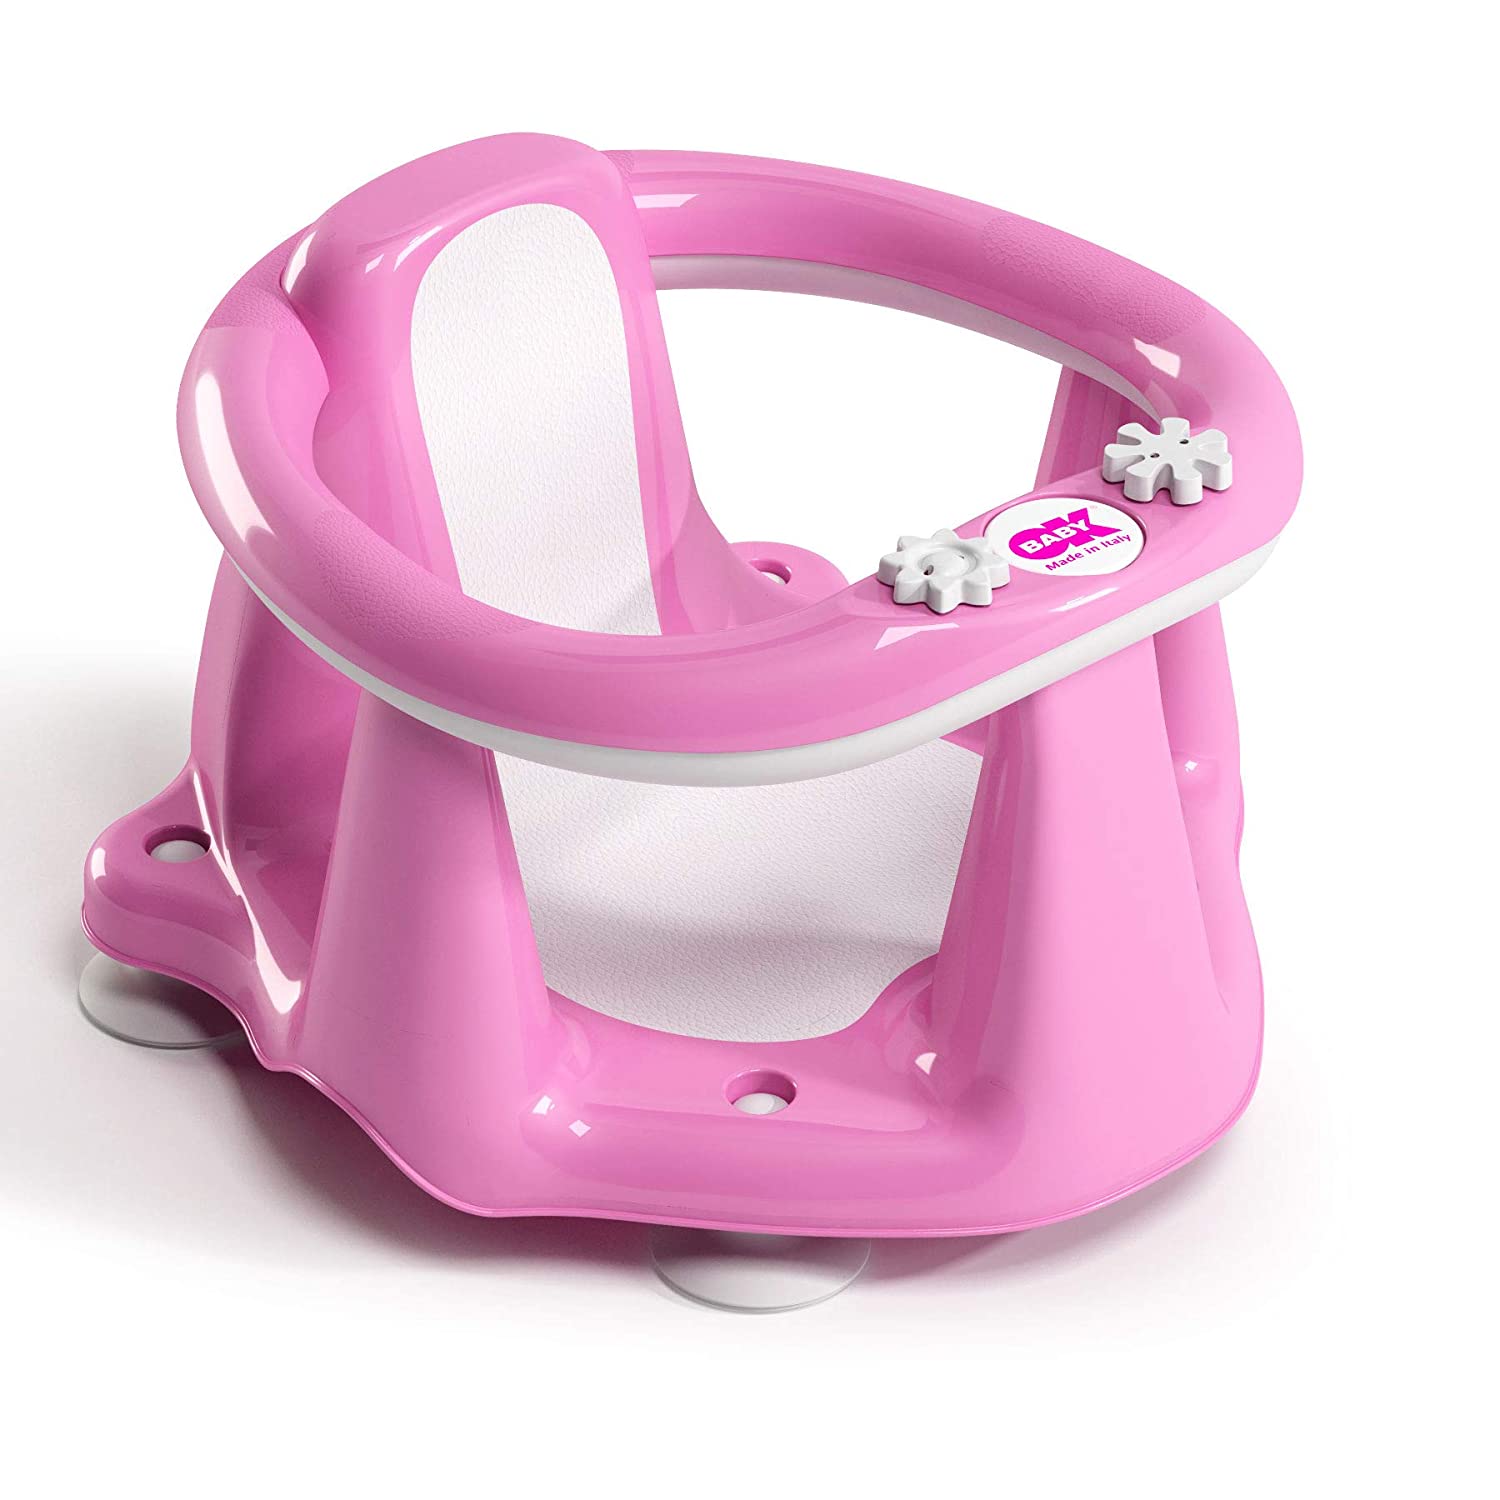 BabySun 80800938 Baby Flipper, Pink One Size